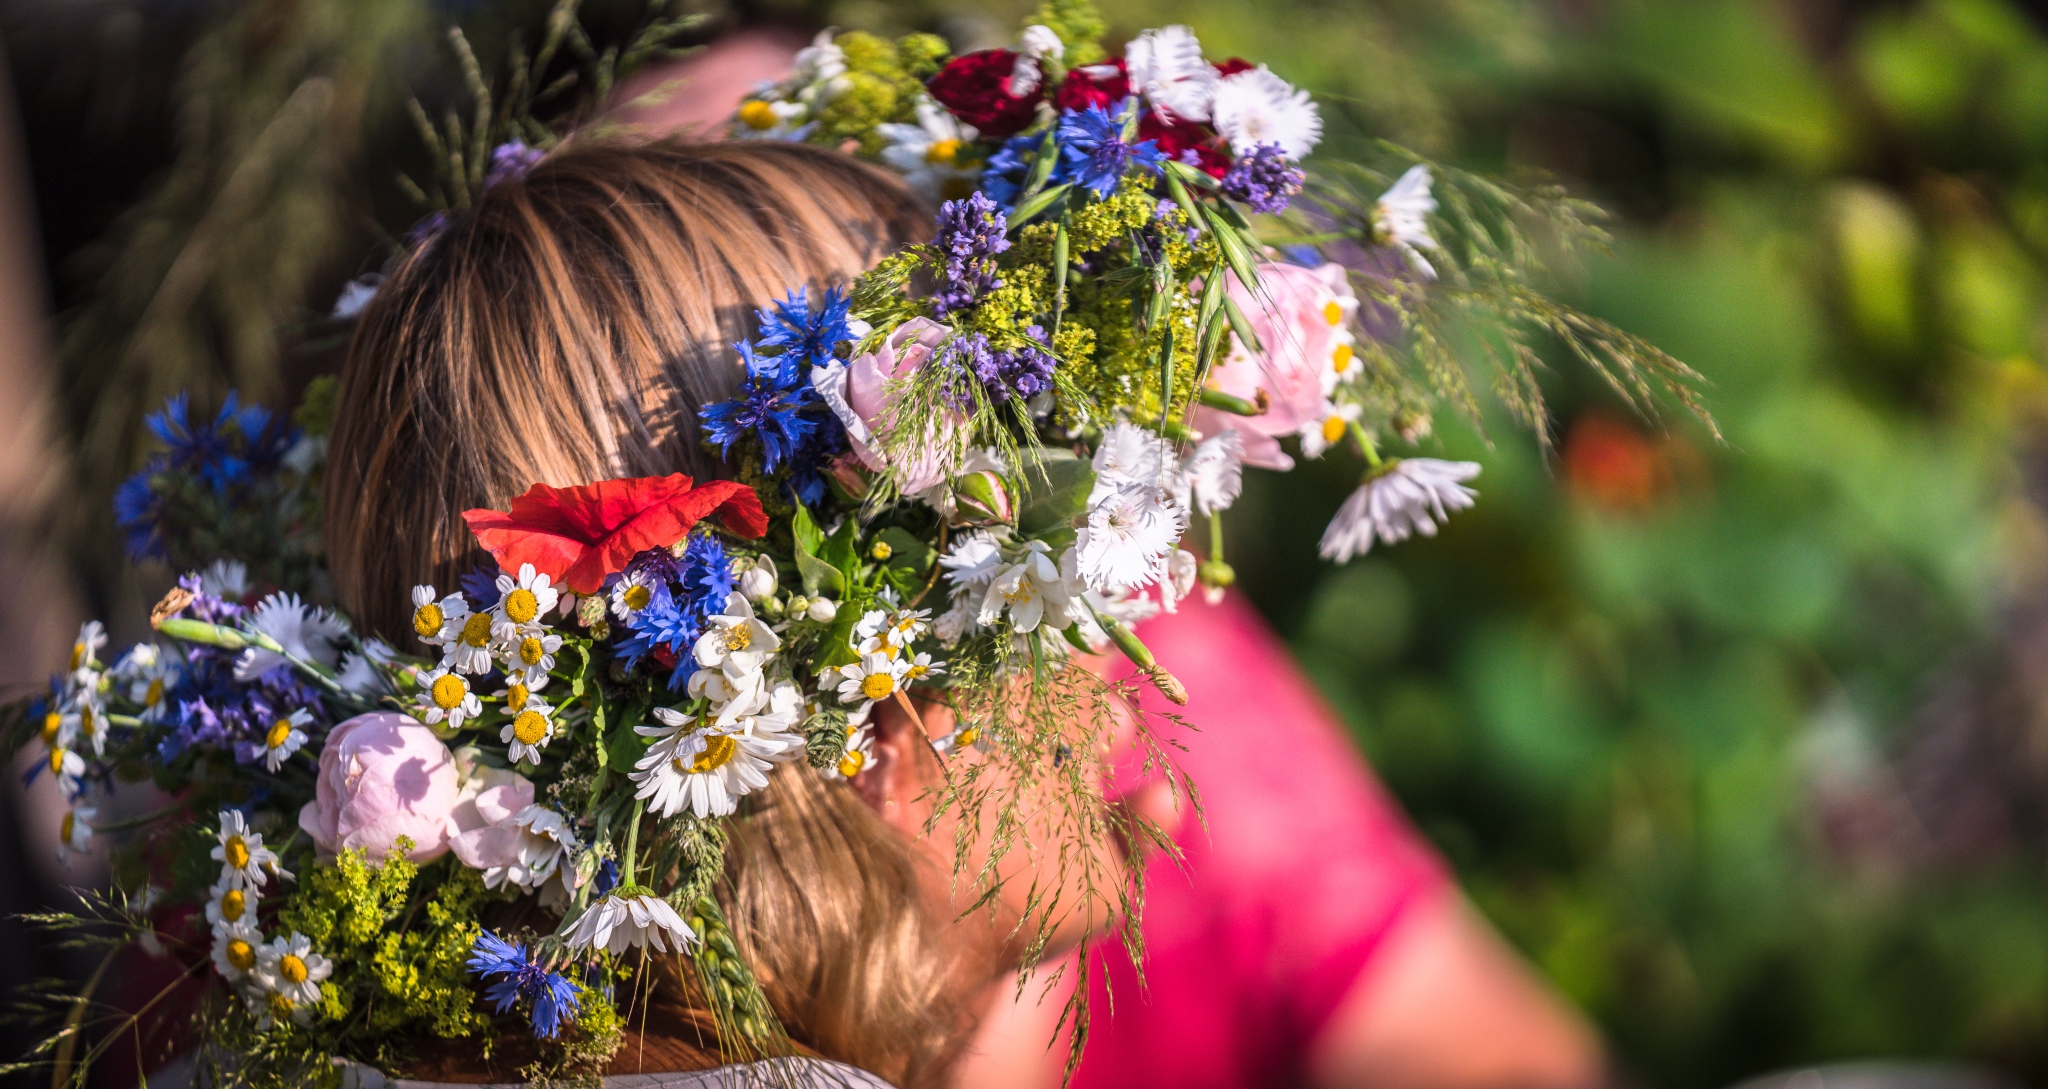 A summer solstice wreath on a woman's head